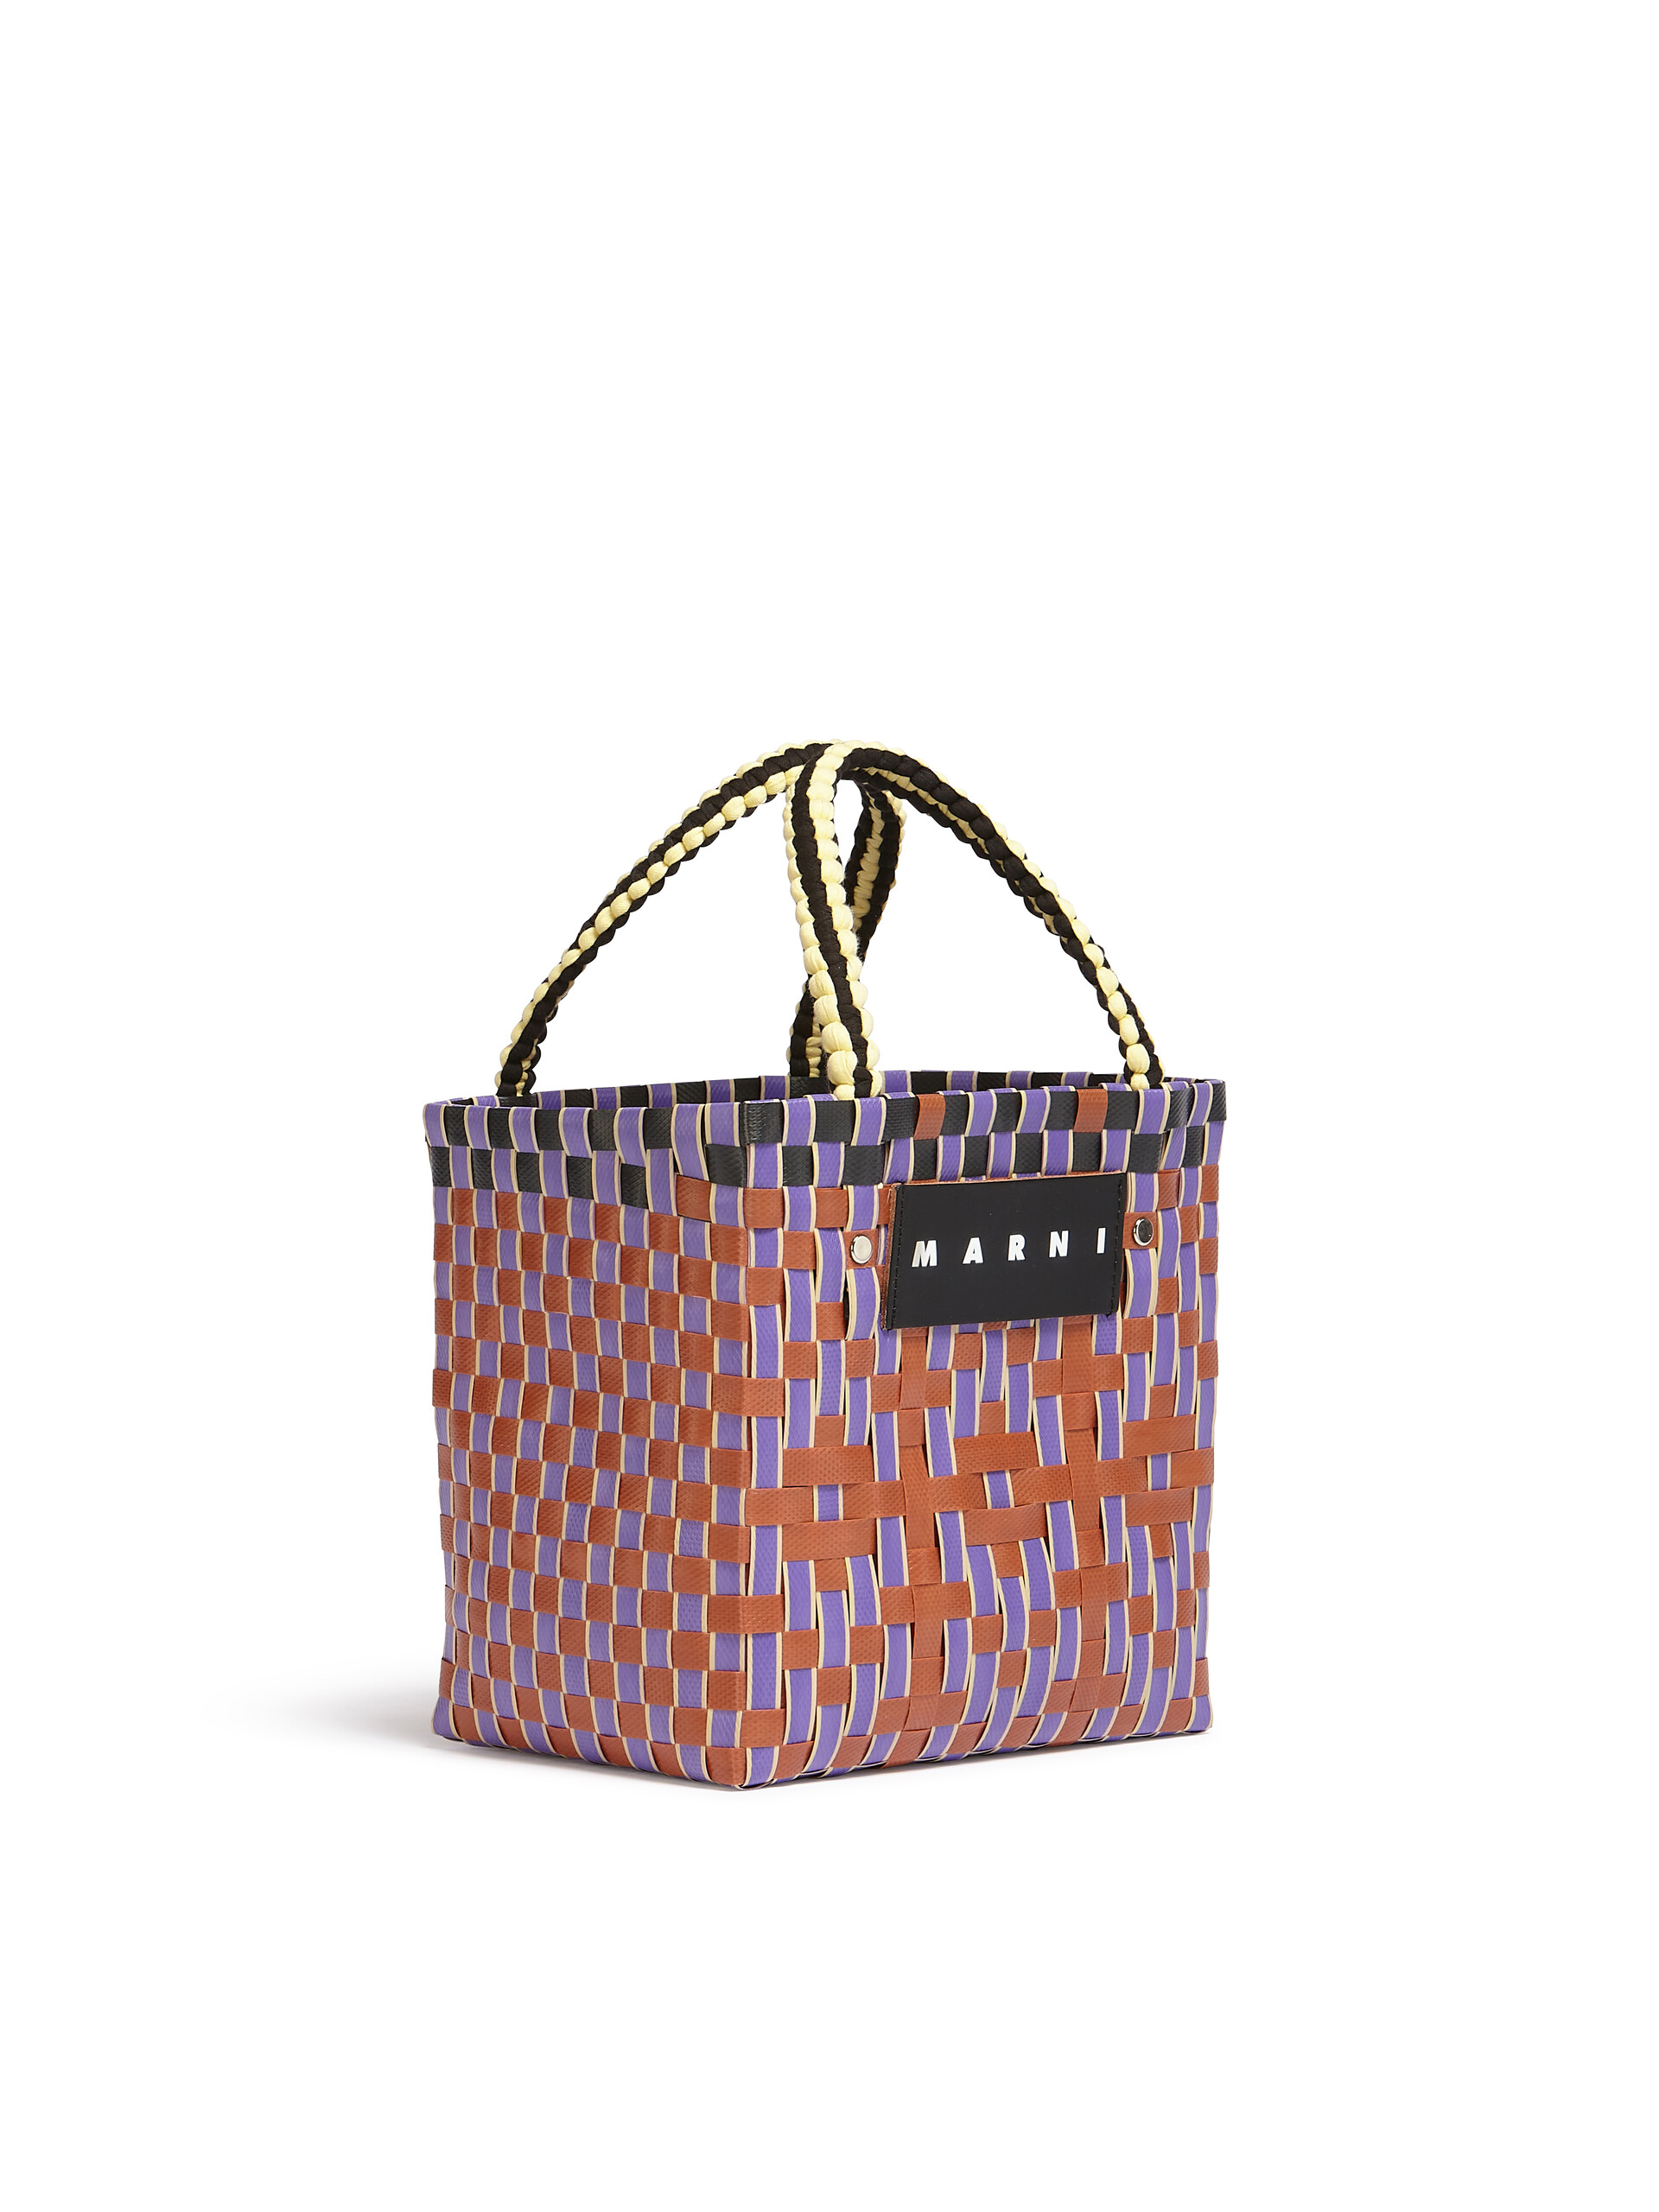 MARNI MARKET BASKET bag in brown diamond woven material - Bags - Image 2